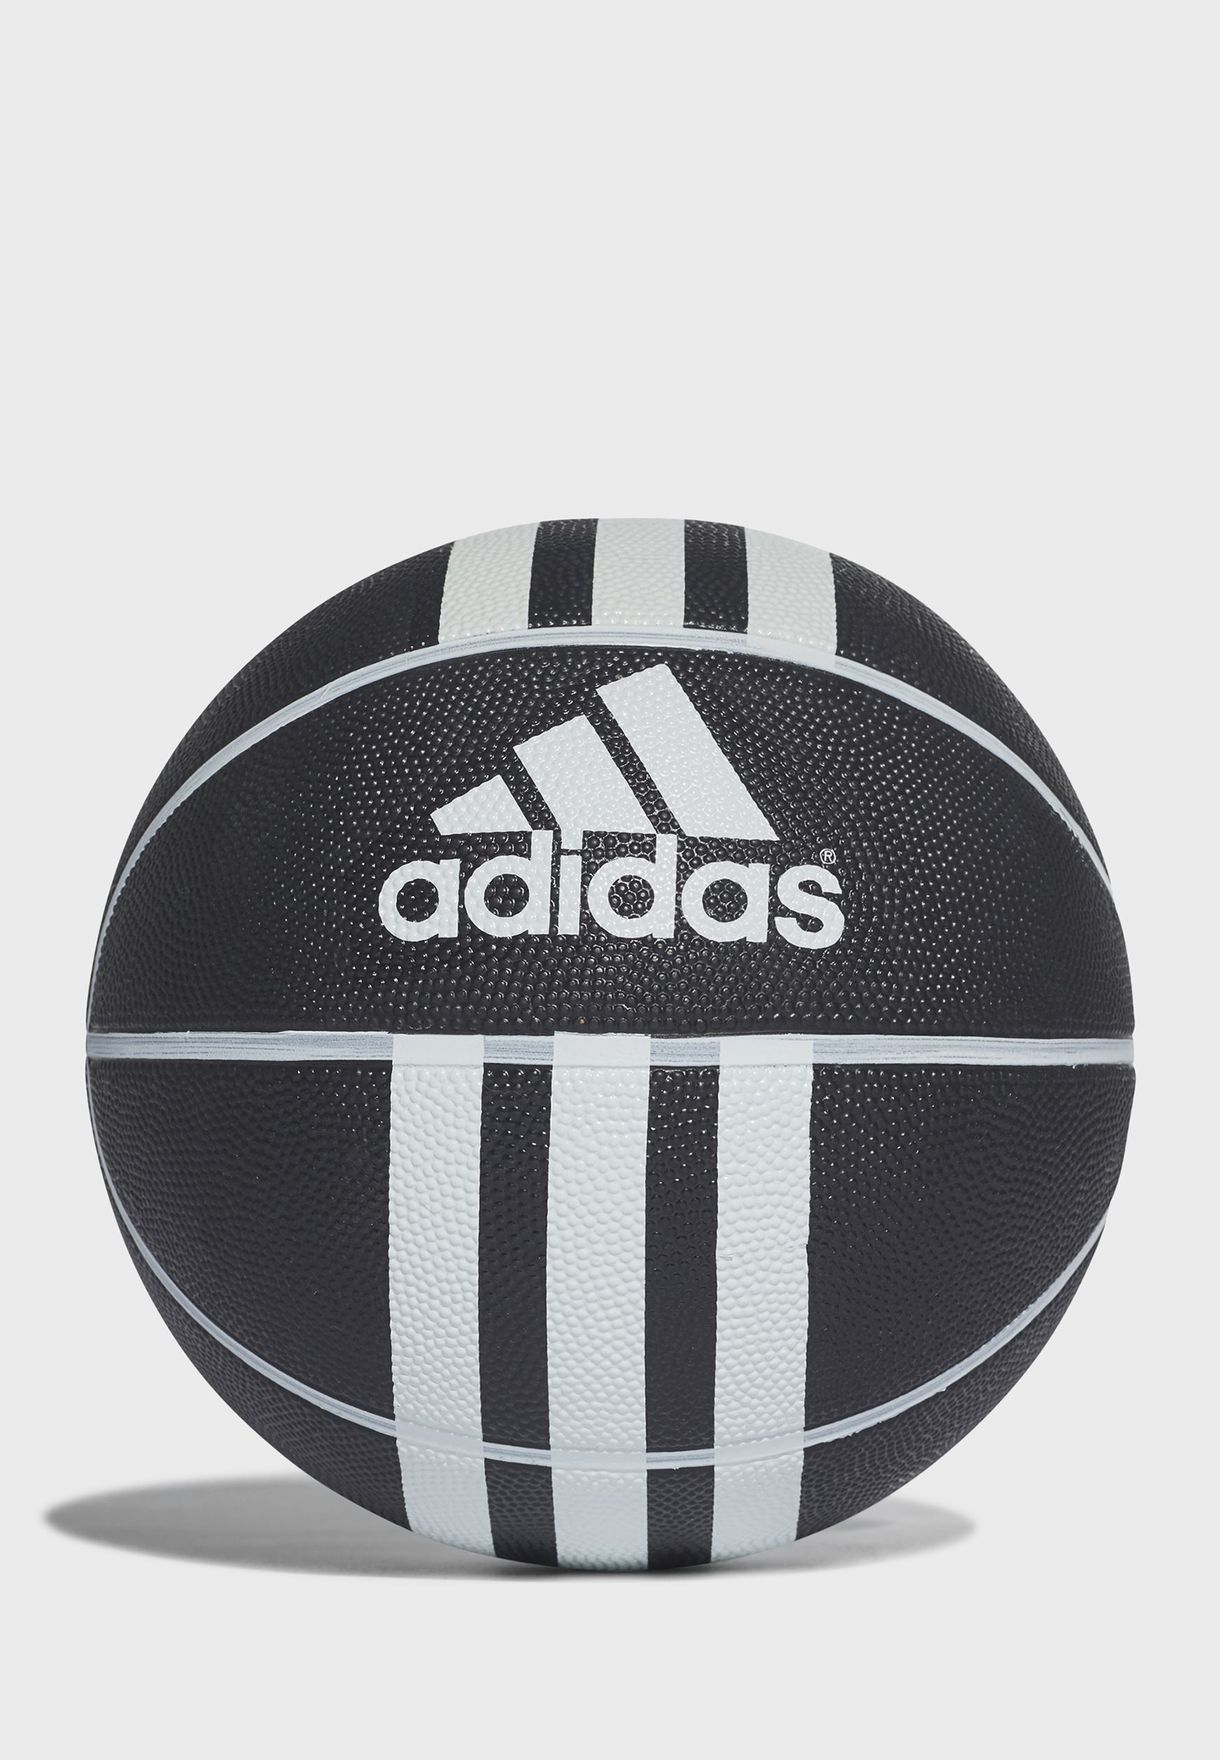 adidas 3s rubber x basketball